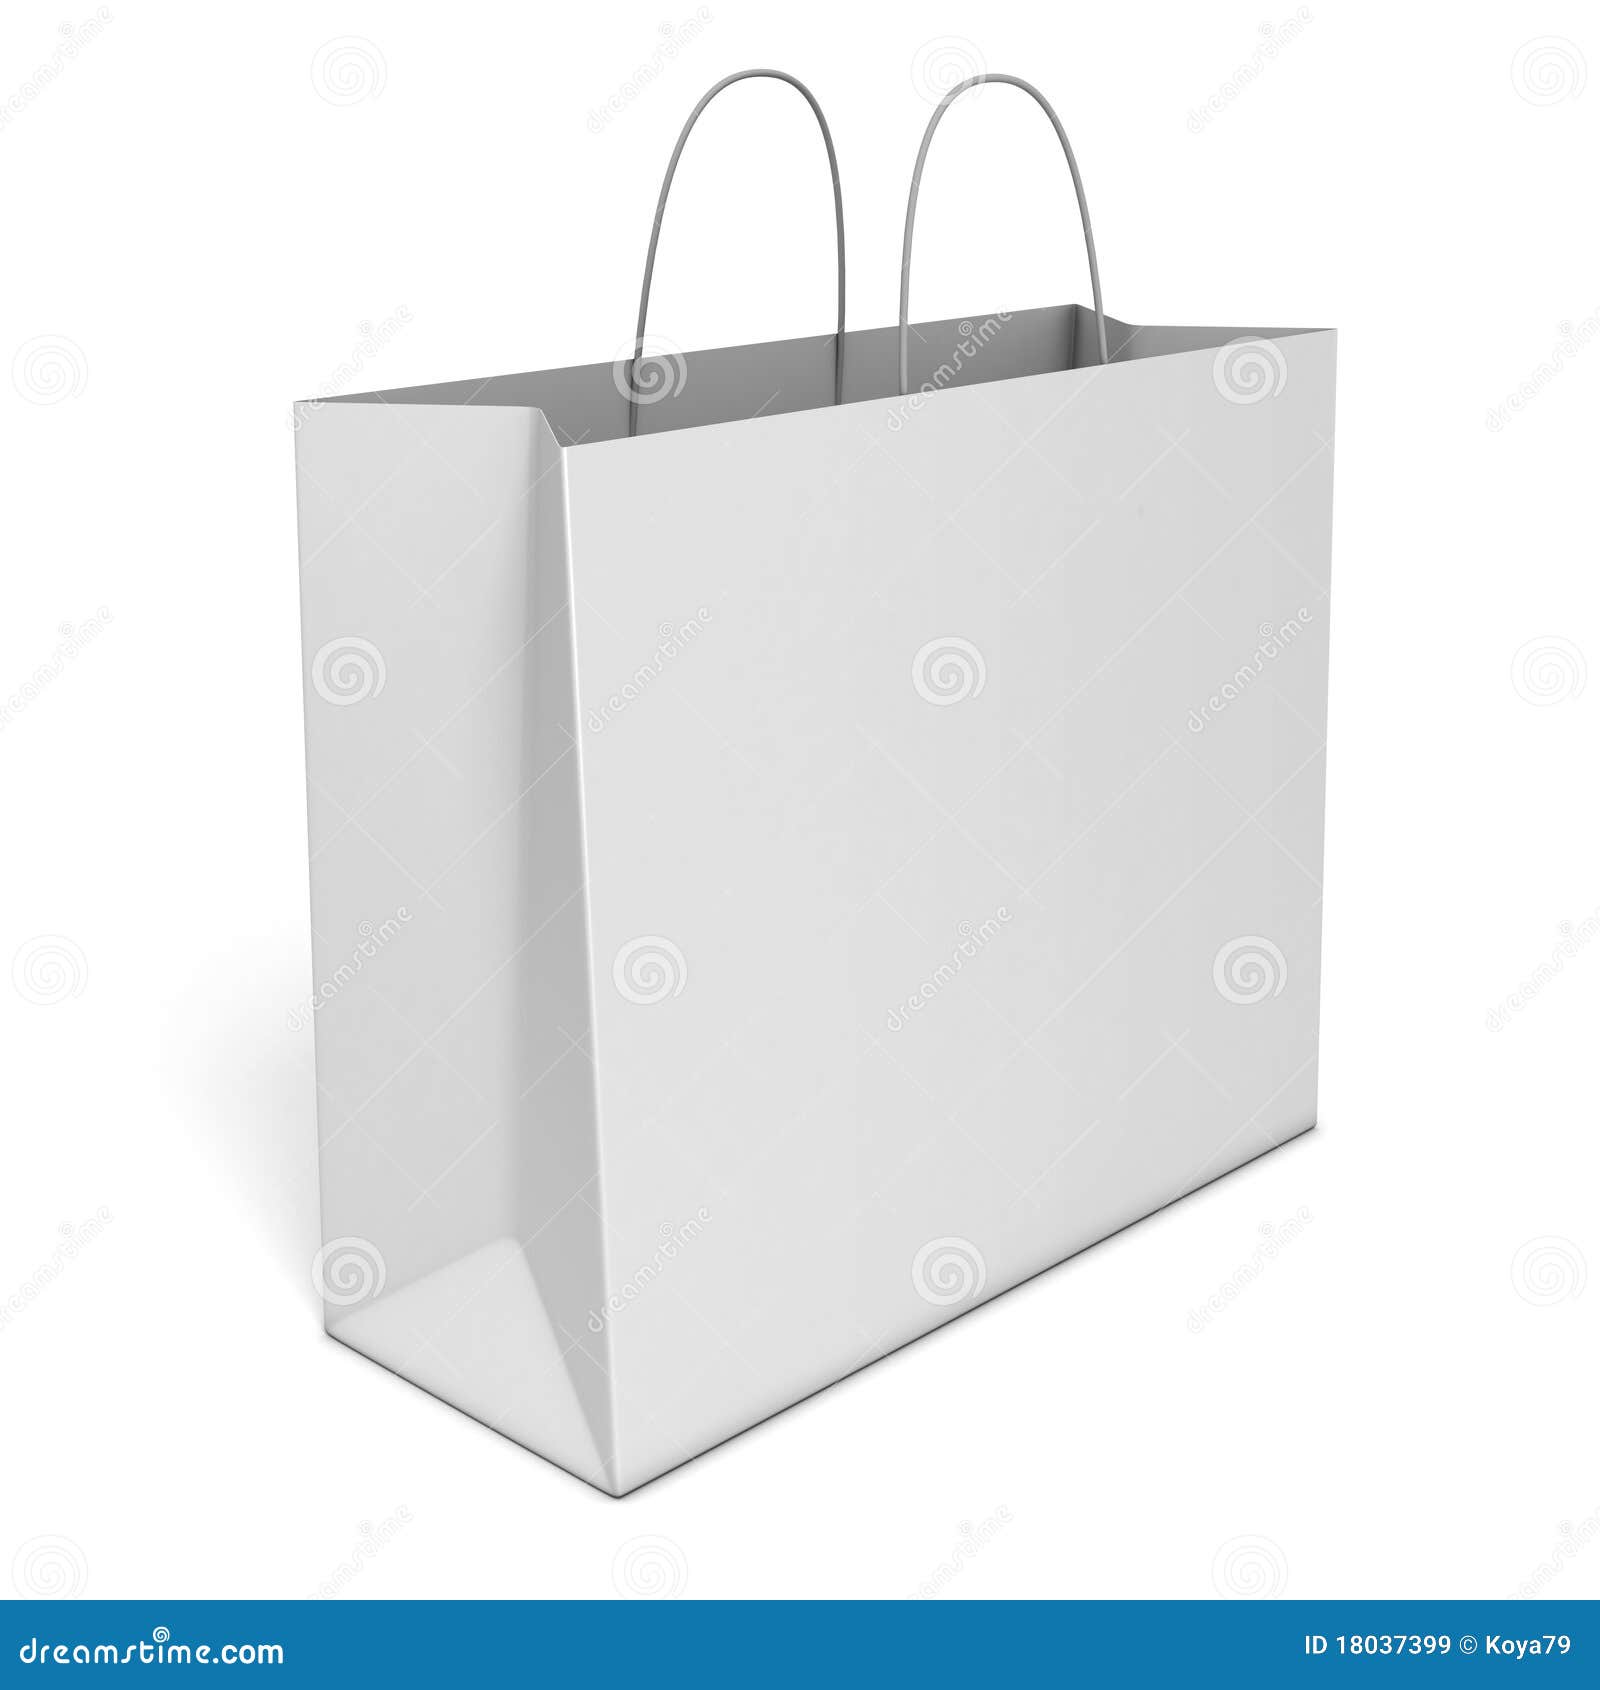 Blank Shopping Bag Isolated Royalty Free Stock Images - Image ...